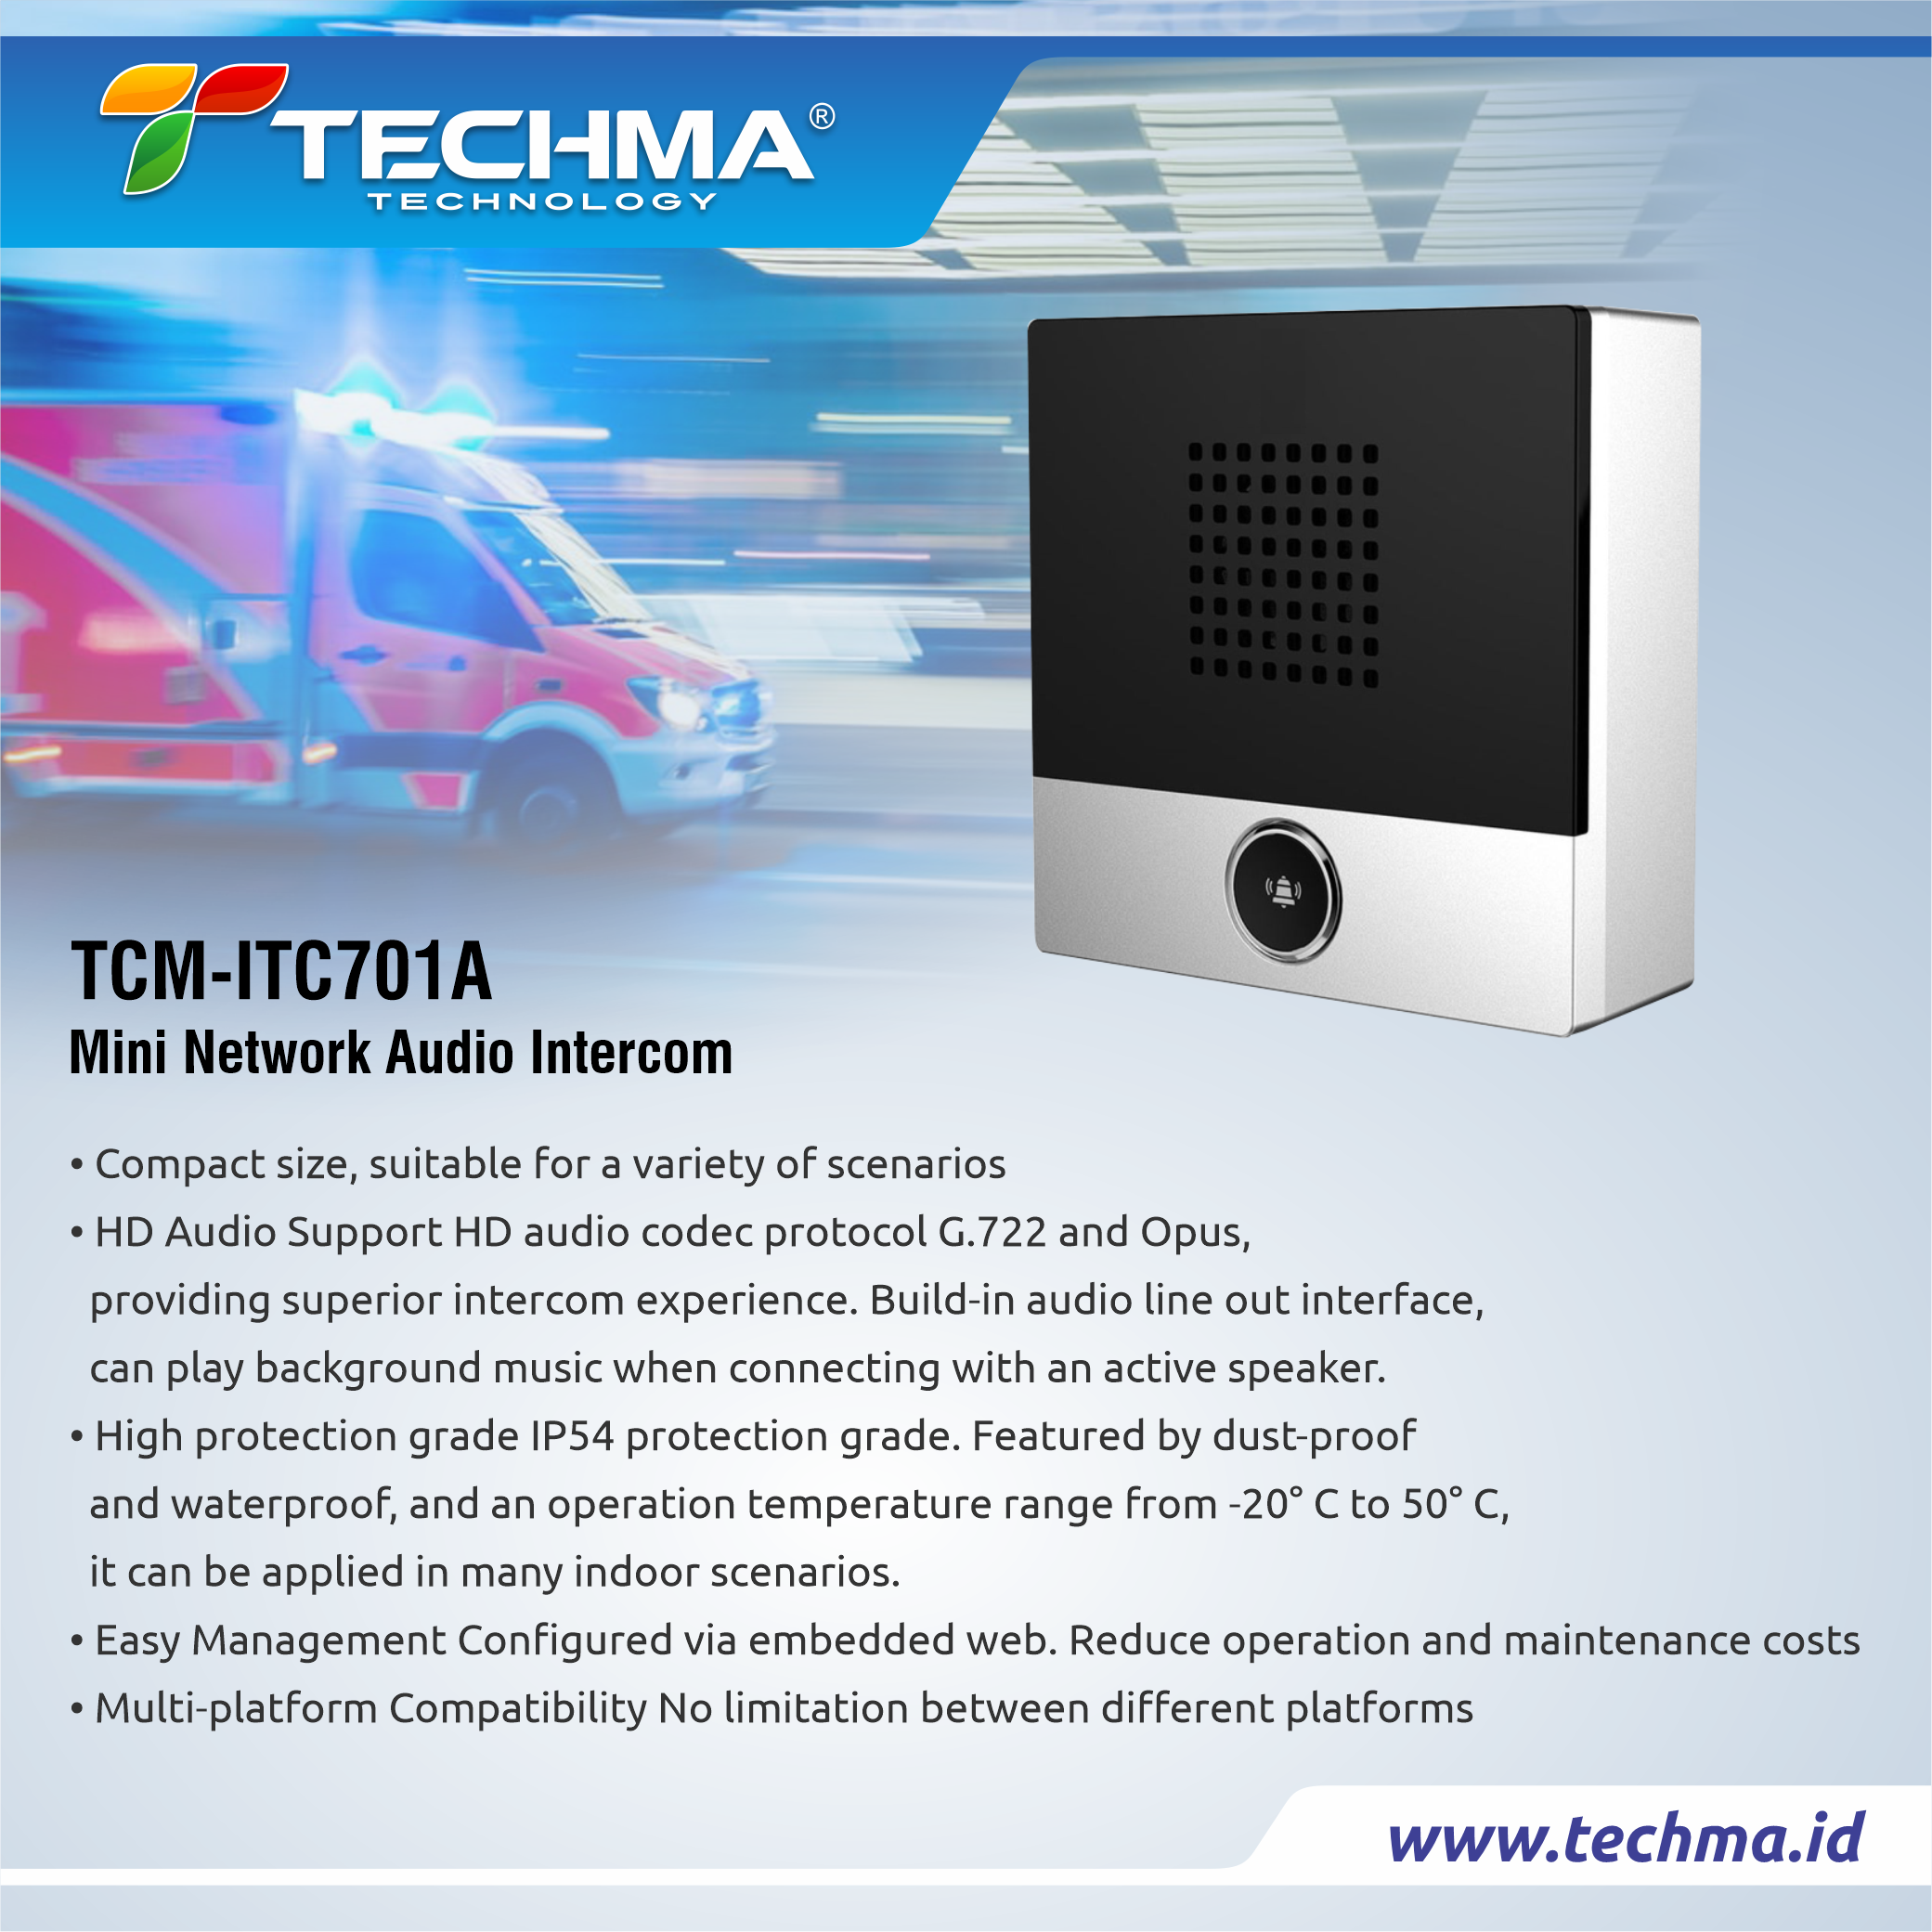 TCM-ITC701A web 2